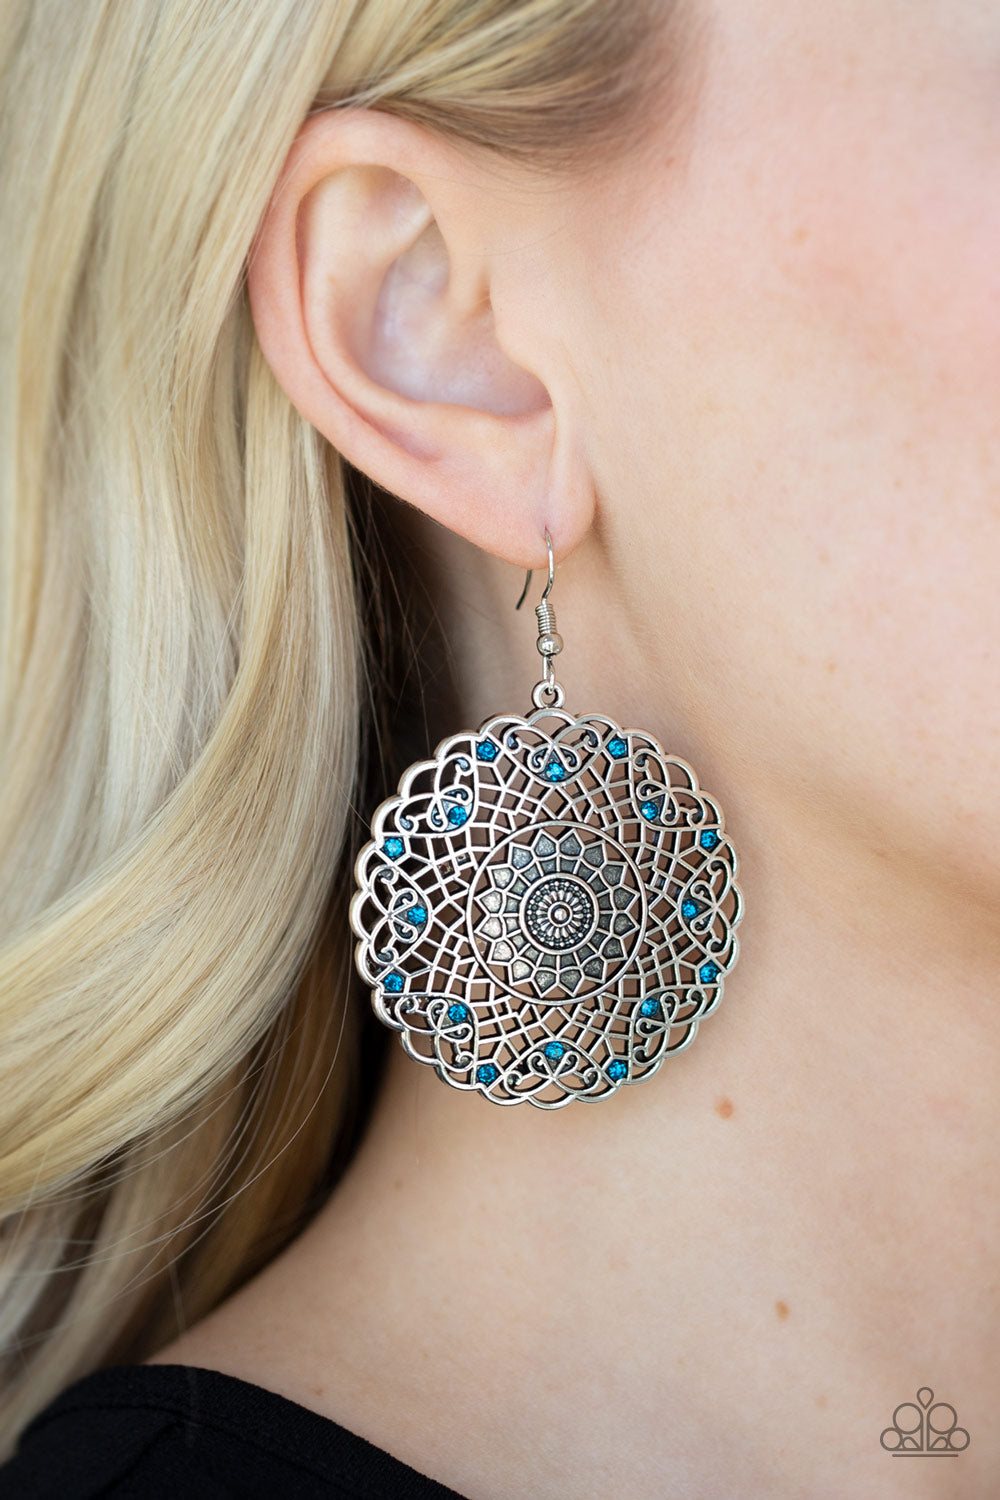 Paparazzi Mandala Mandalay - Blue Rhinestones - Silver Earrings - $5 Jewelry With Ashley Swint